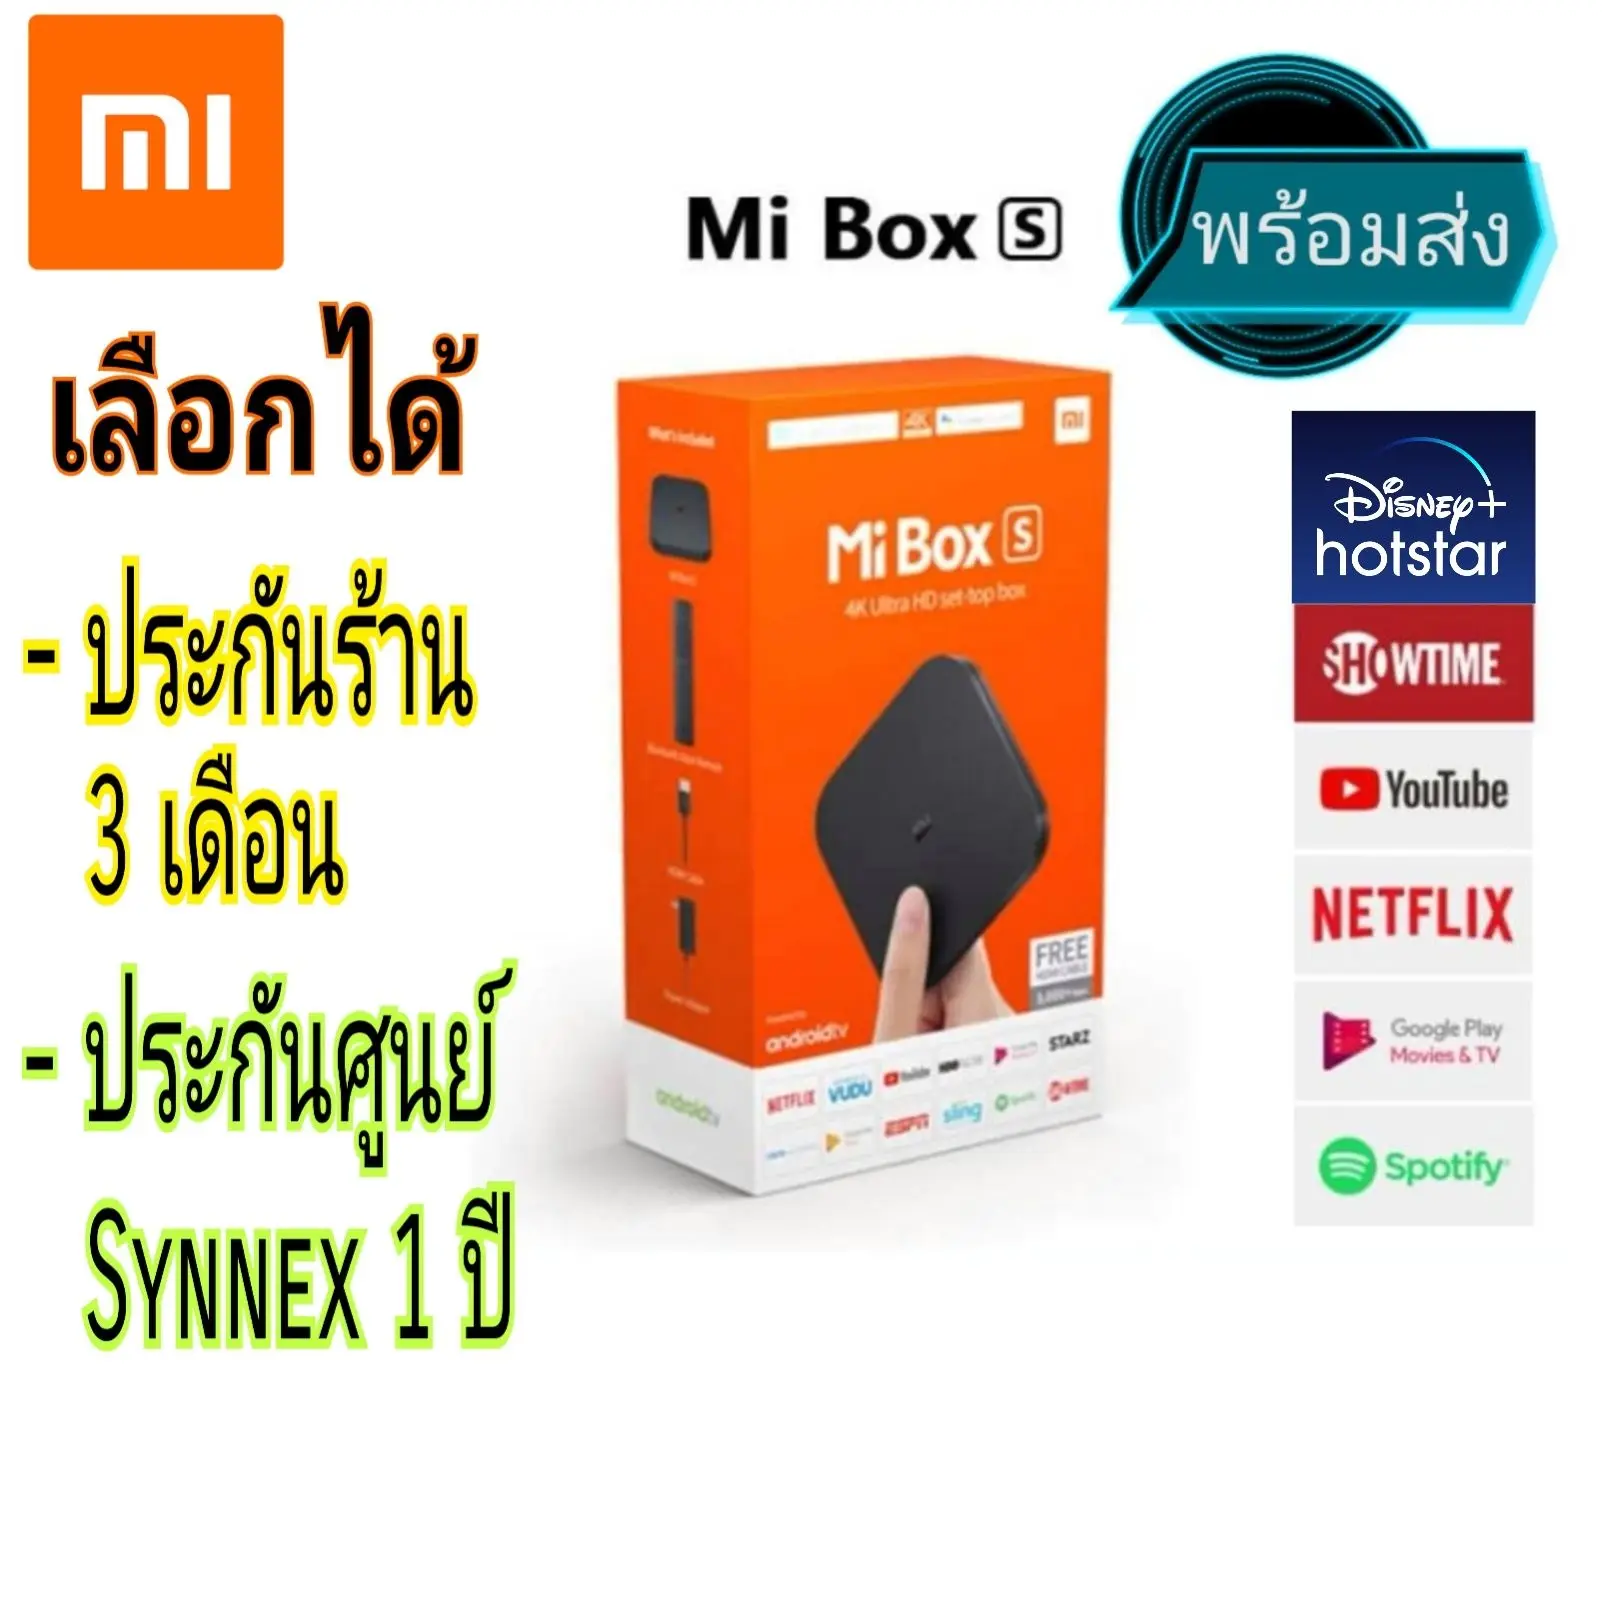 Mi Box S 4K Xiaomi กล่องแอนดรอยด์ทีวี​ Global Version 4K รองรับภาษาไทย​ Android​ Box Dealforyou